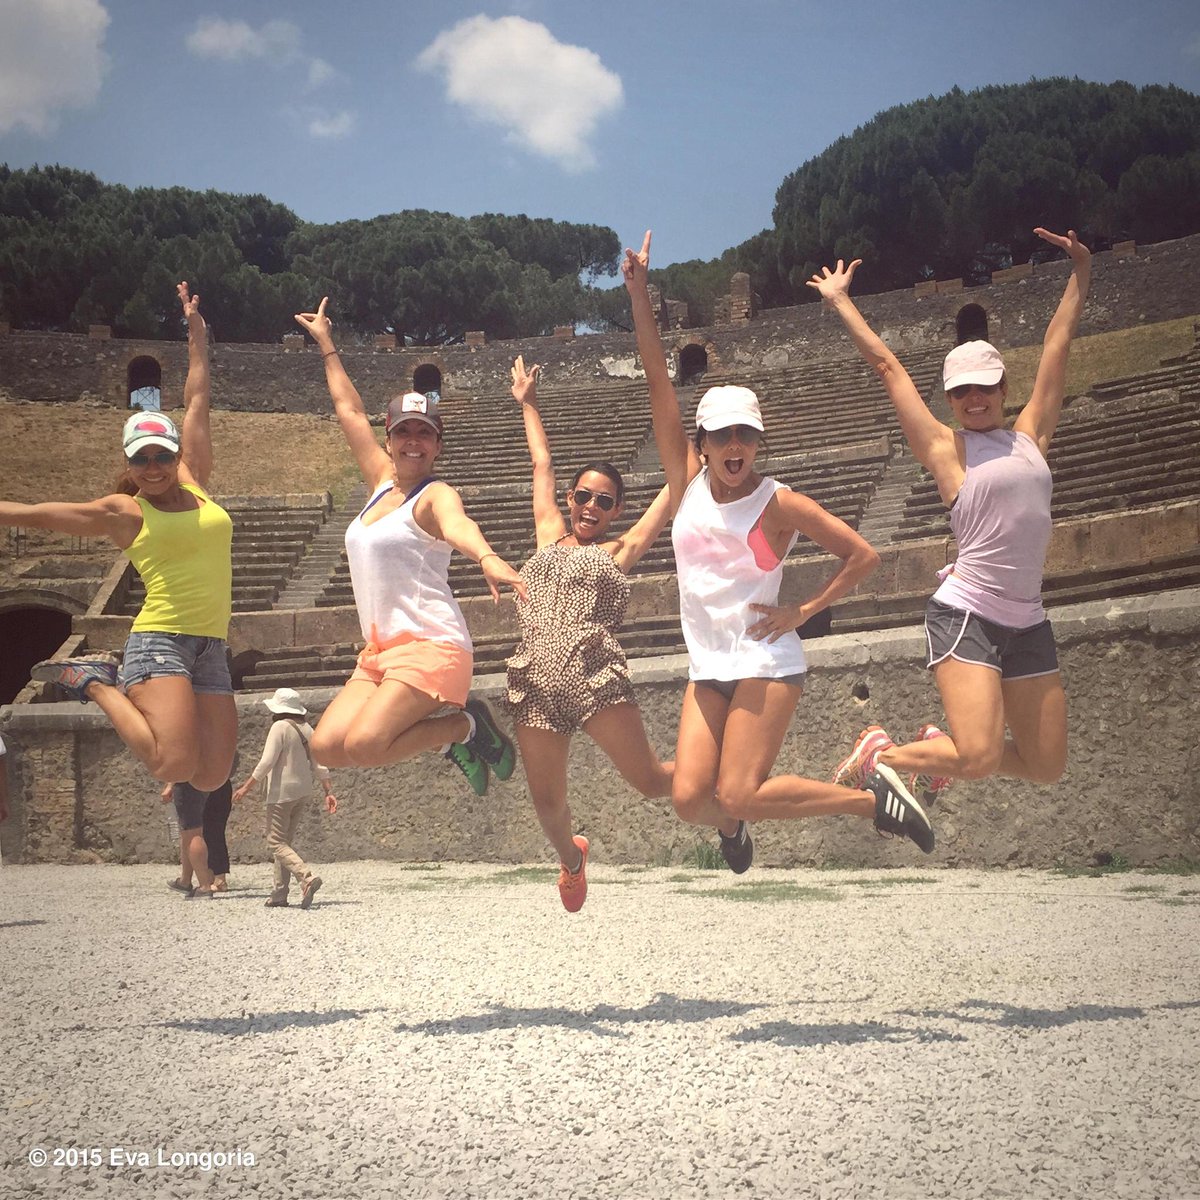 Jumping around at the coliseum in #Pompeii with @ClaudiaZapata @alinaperalta @MariaRBravo http://t.co/gQLcoDcrXg